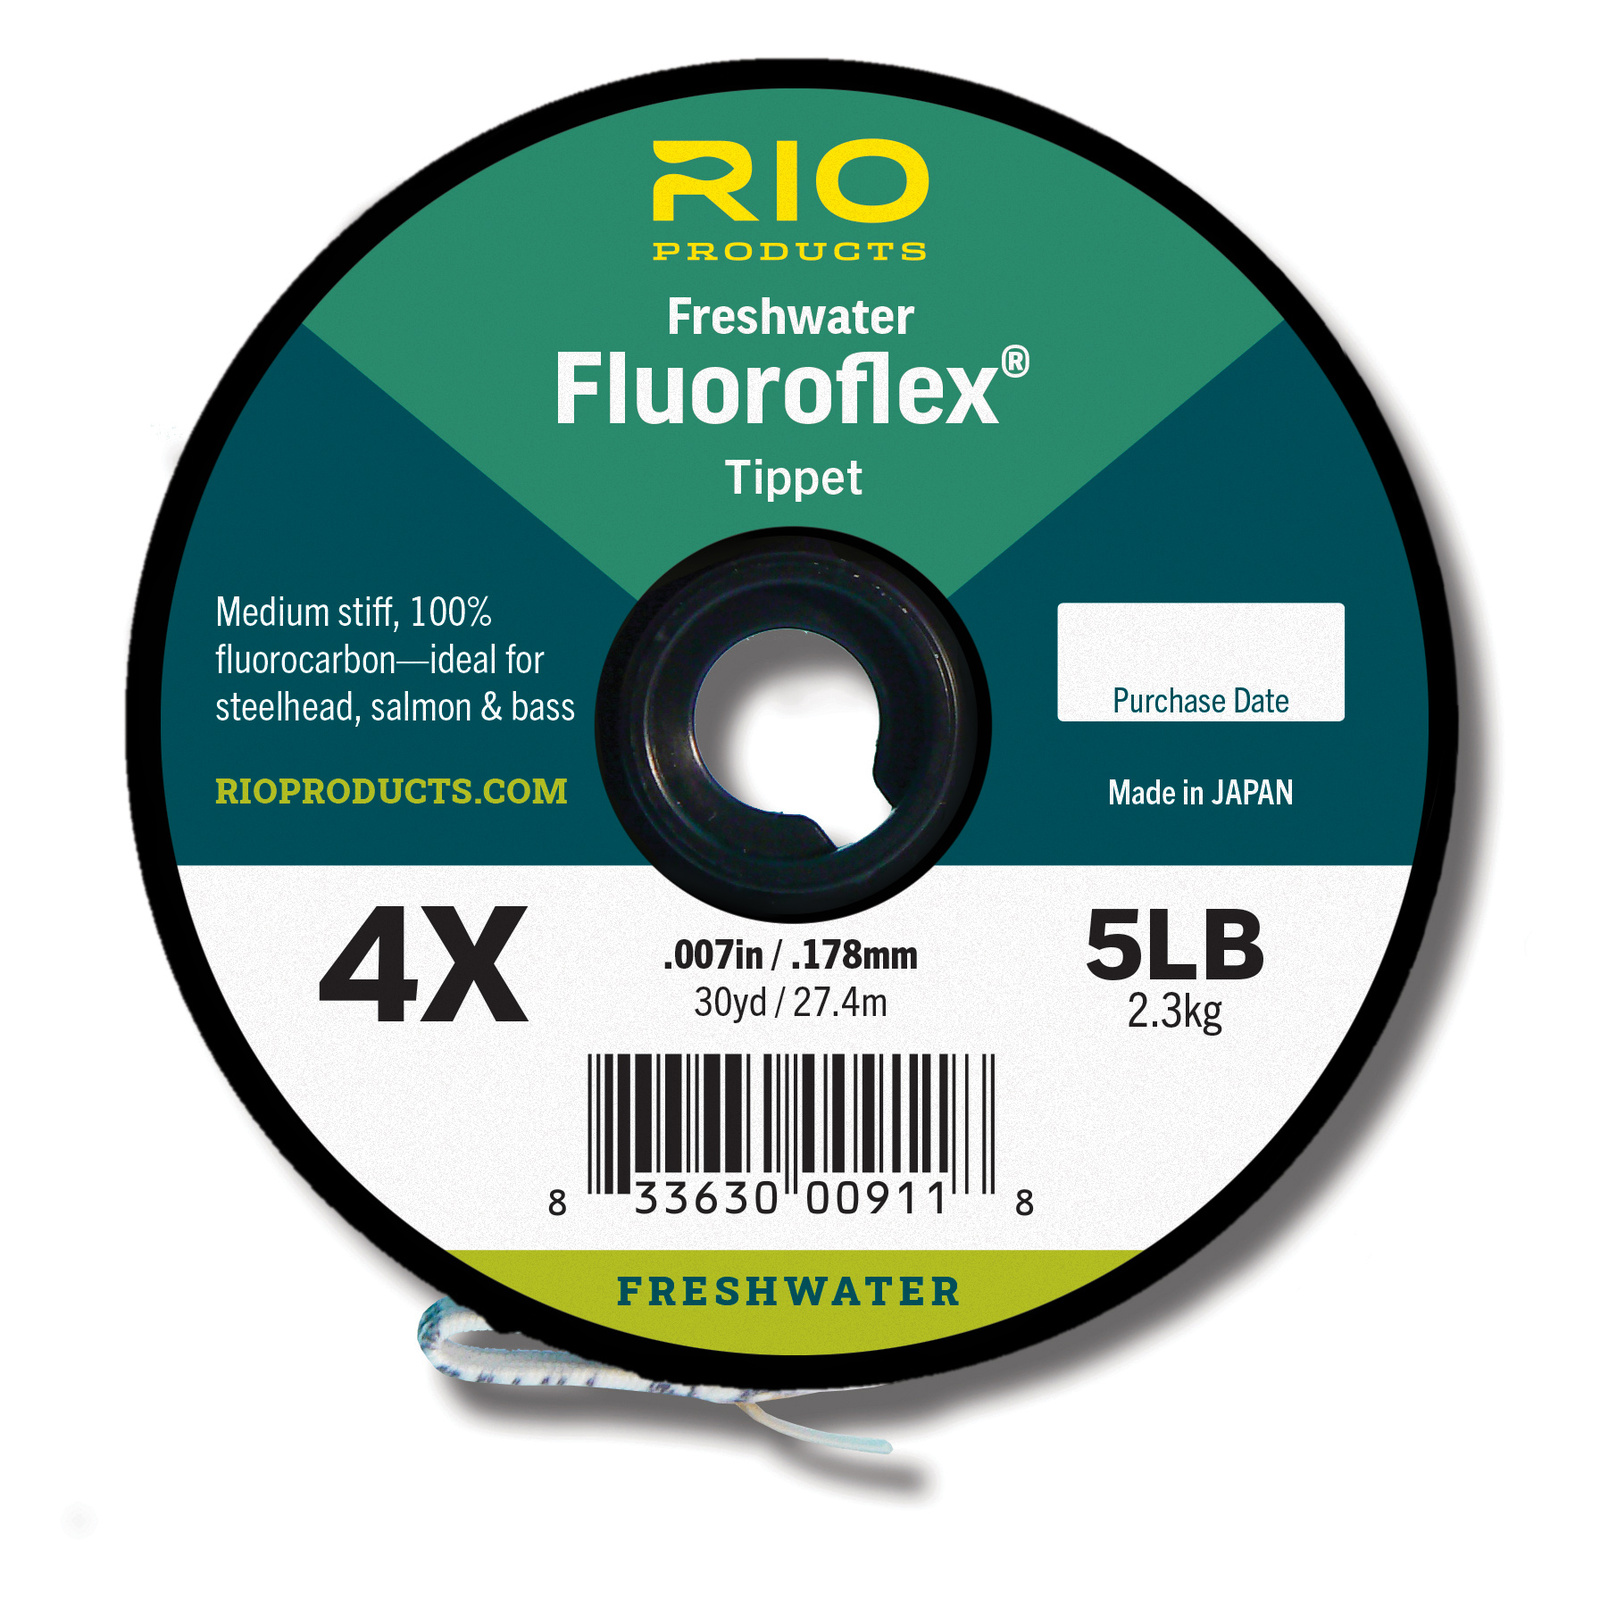 Rio Freshwater Fluoroflex Freshwater Tippet · 2x · 90 ft